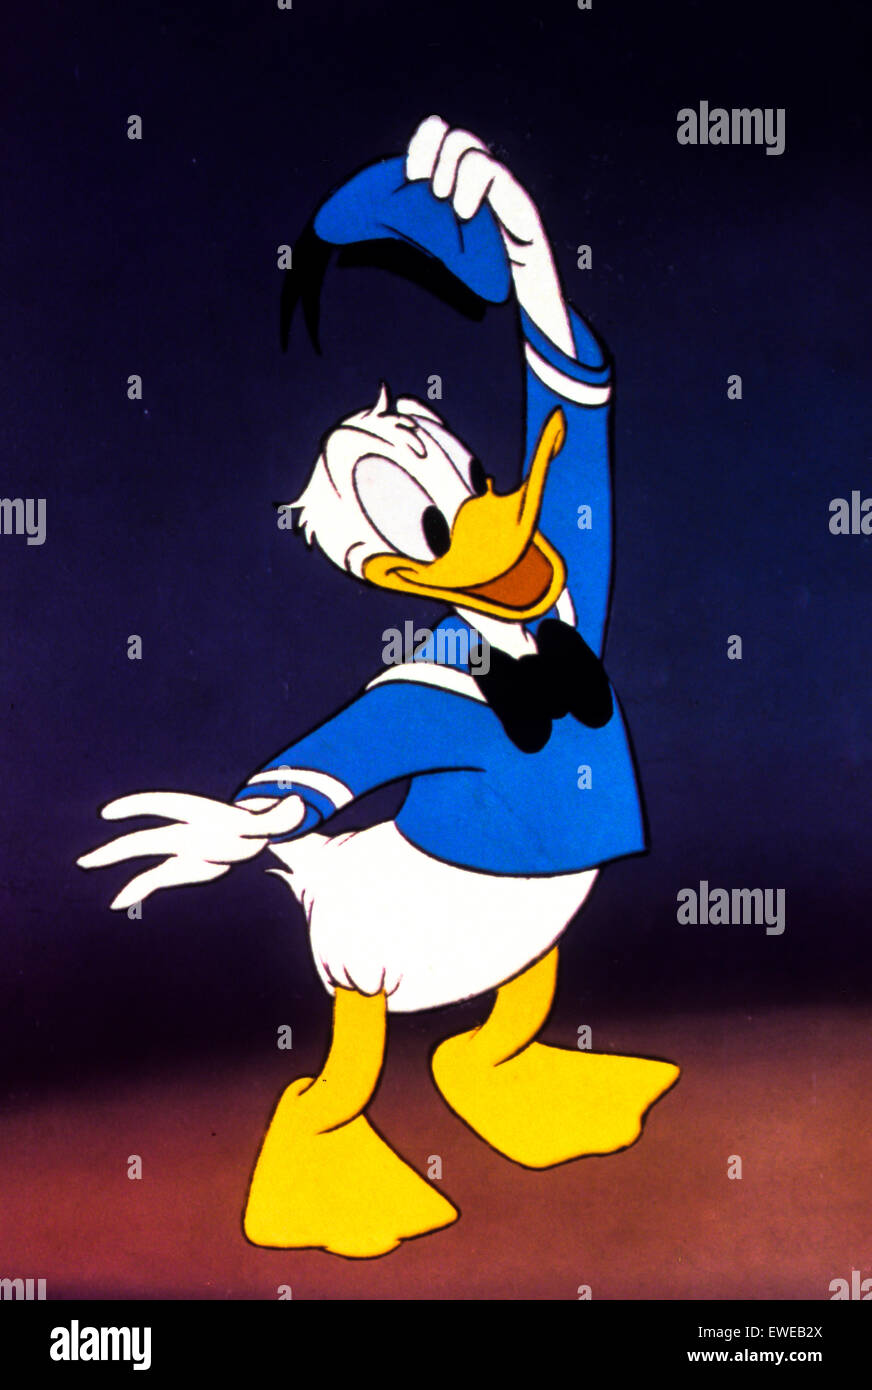 Donald duck cartoon hi-res stock photography and images - Alamy